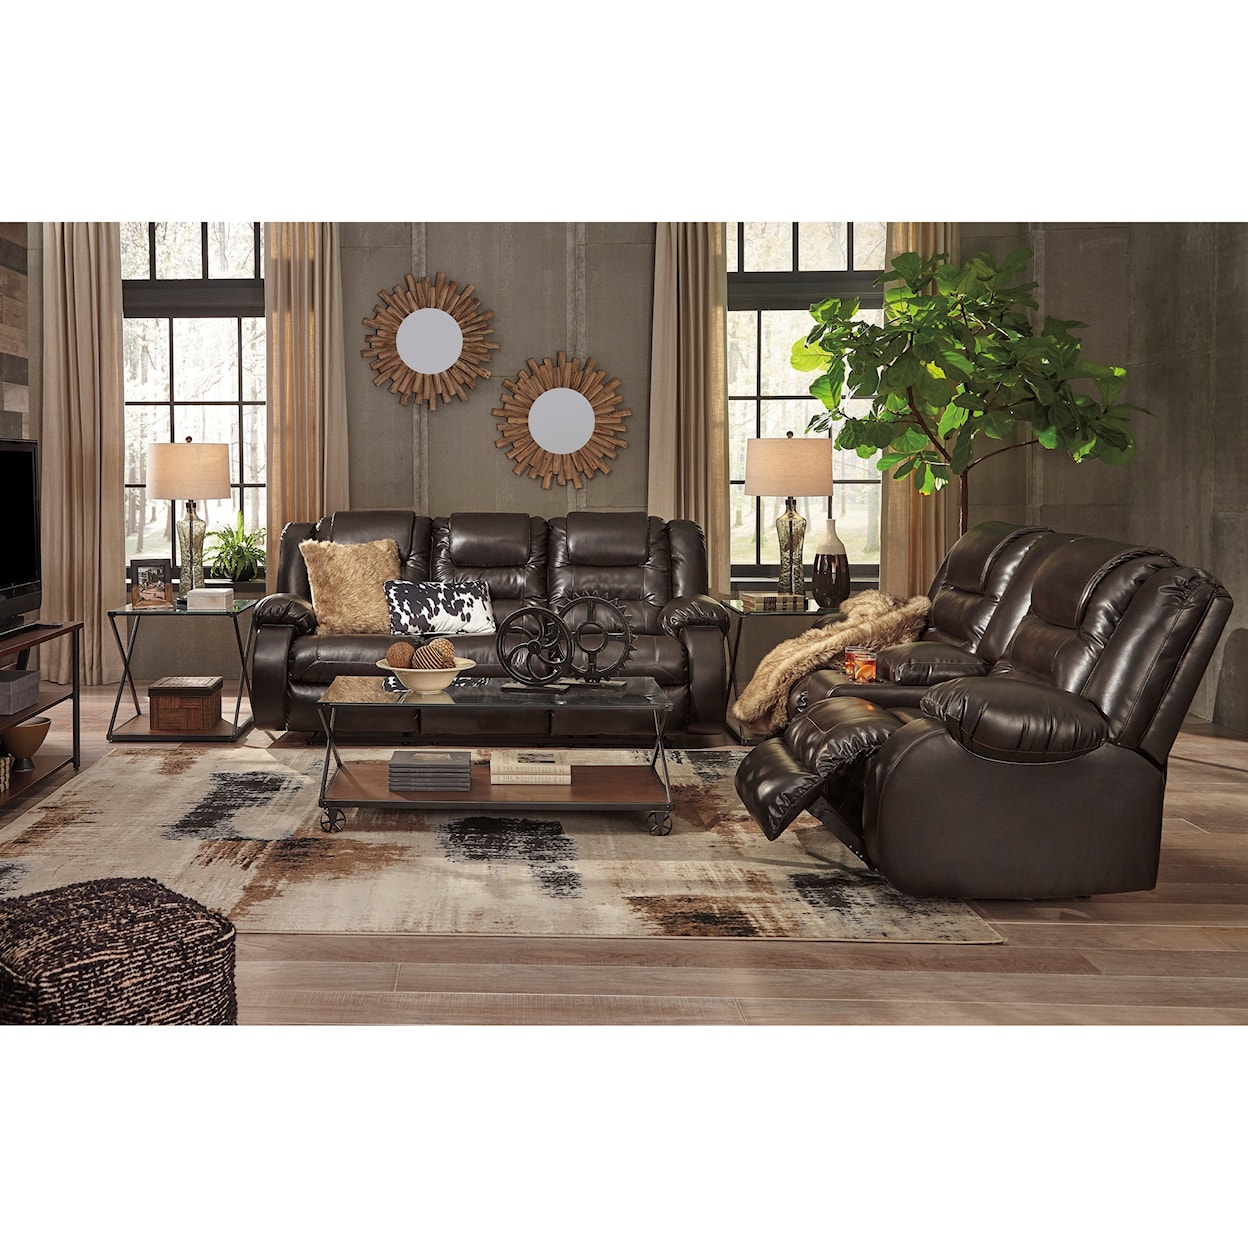 Ashley Furniture Signature Design Vacherie Reclining Living Room Group